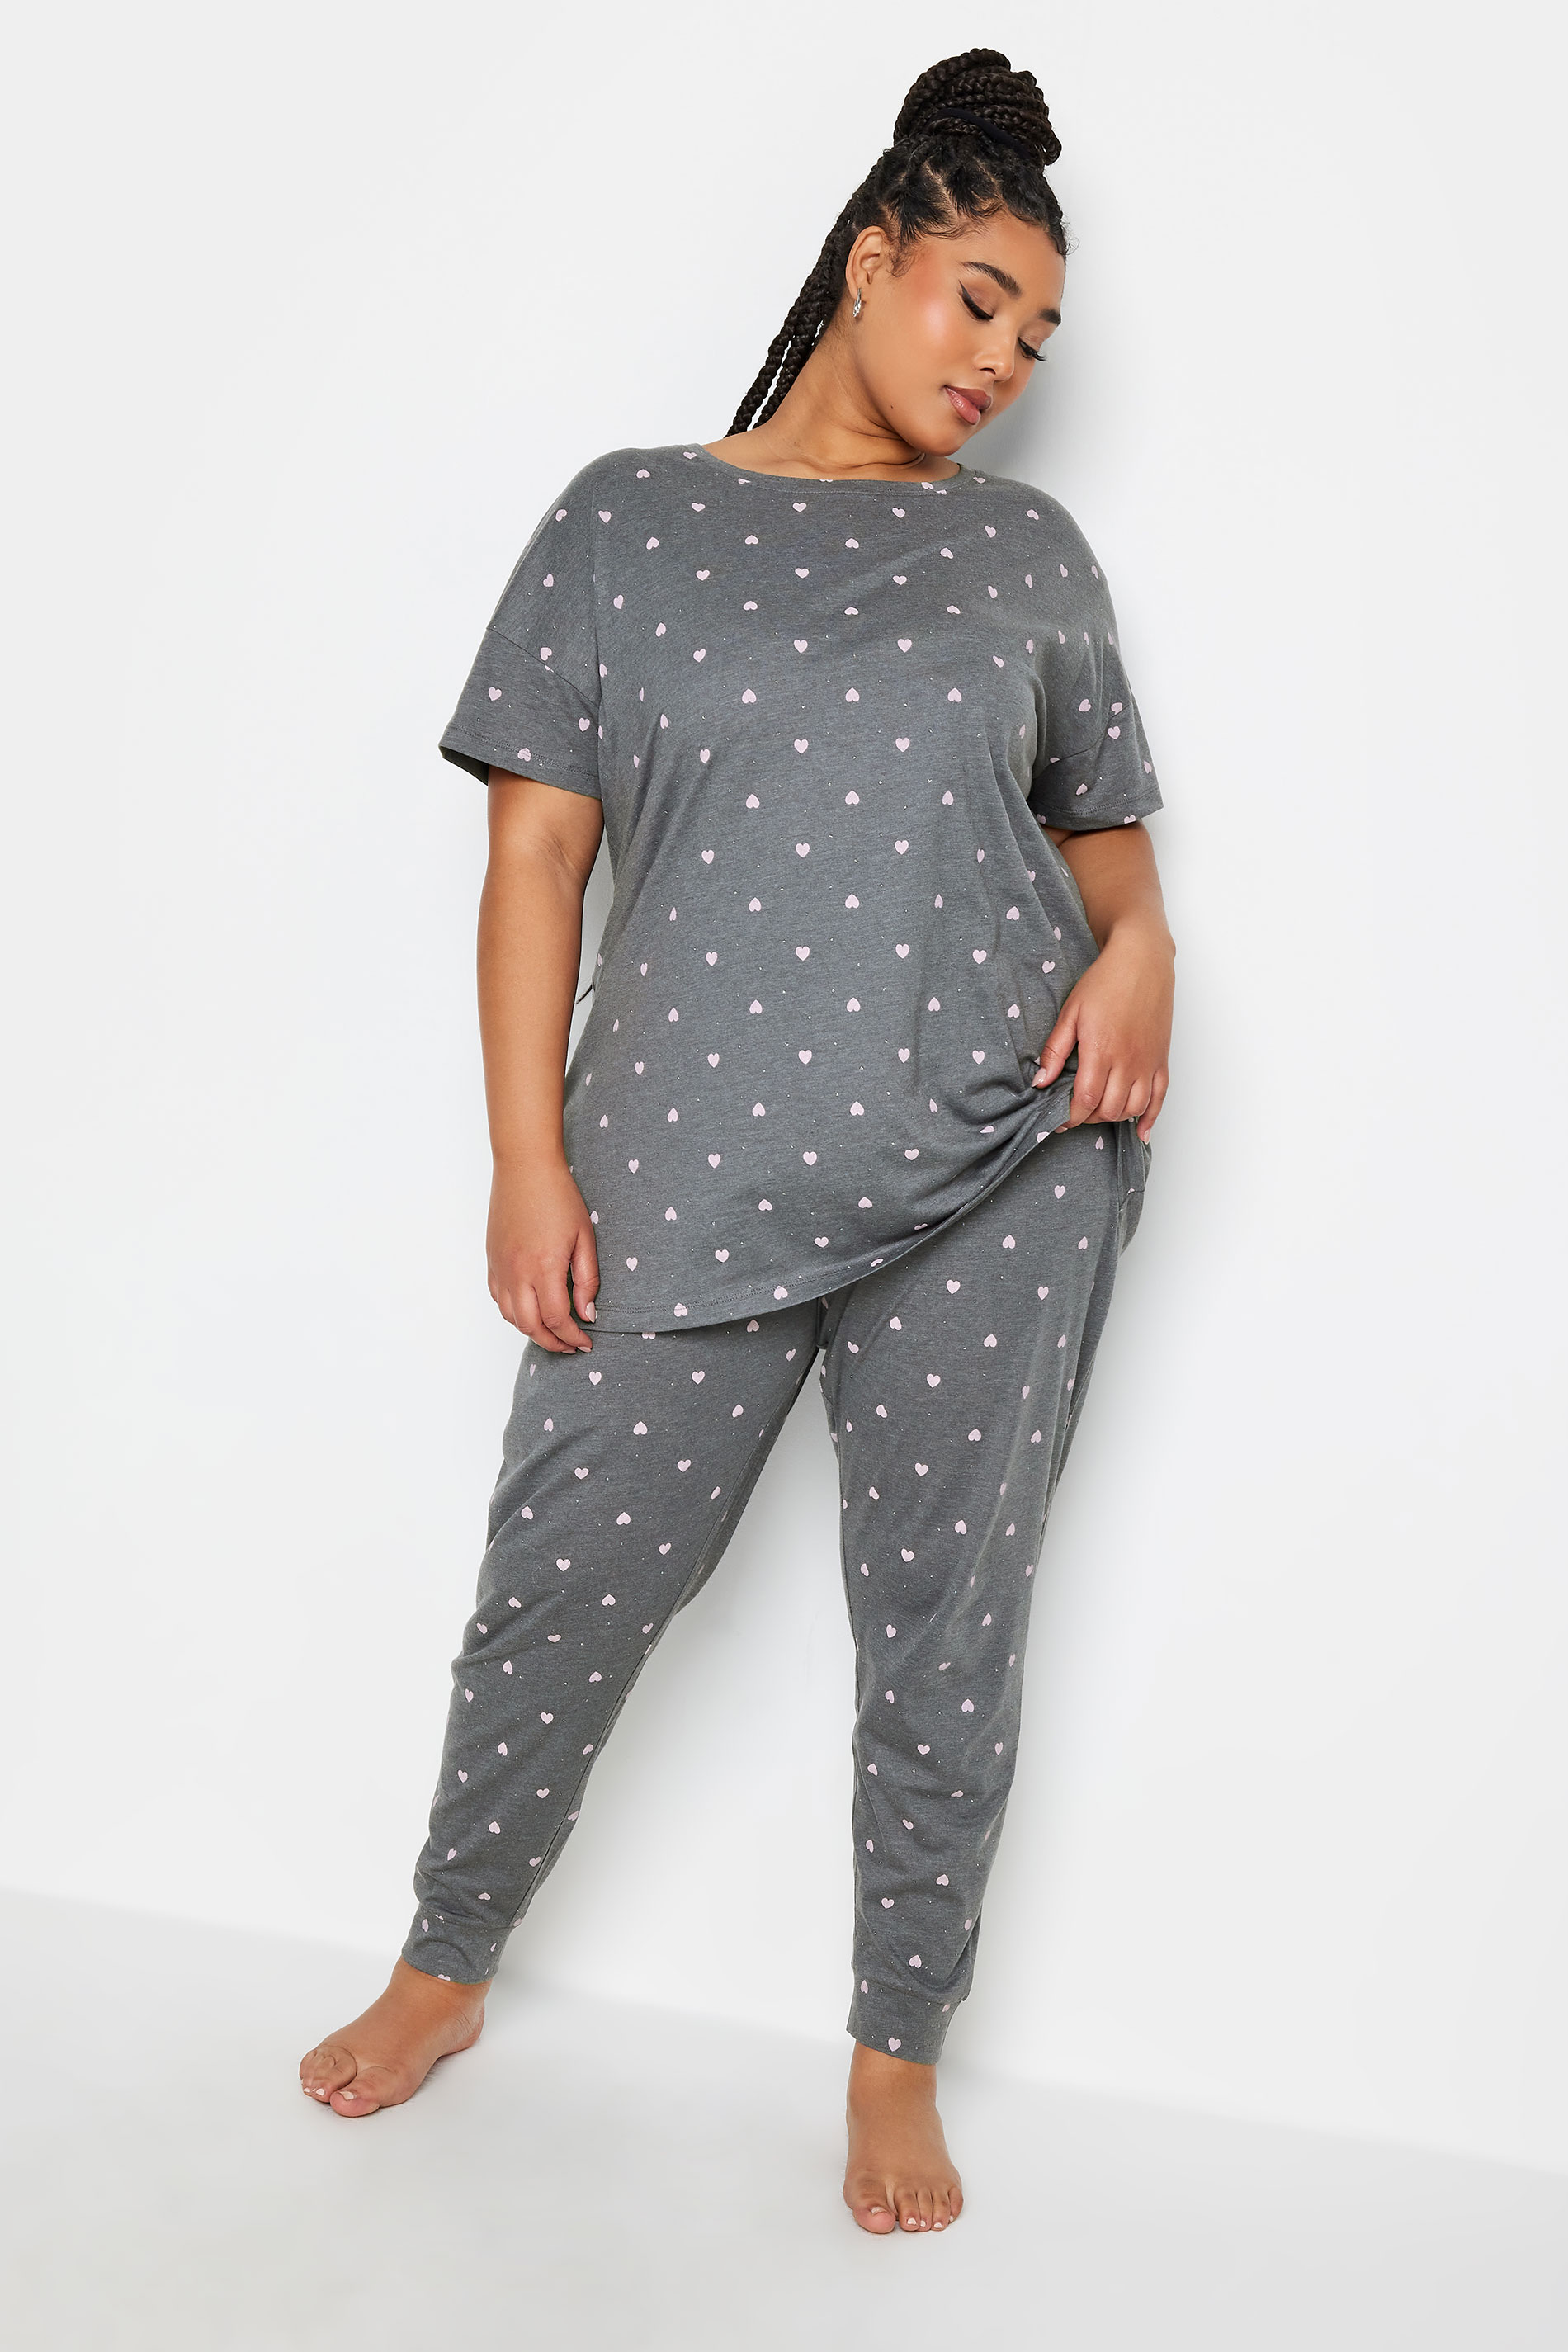 YOURS Plus Size Grey Mini Heart Print Pyjama Set | Yours Clothing 2